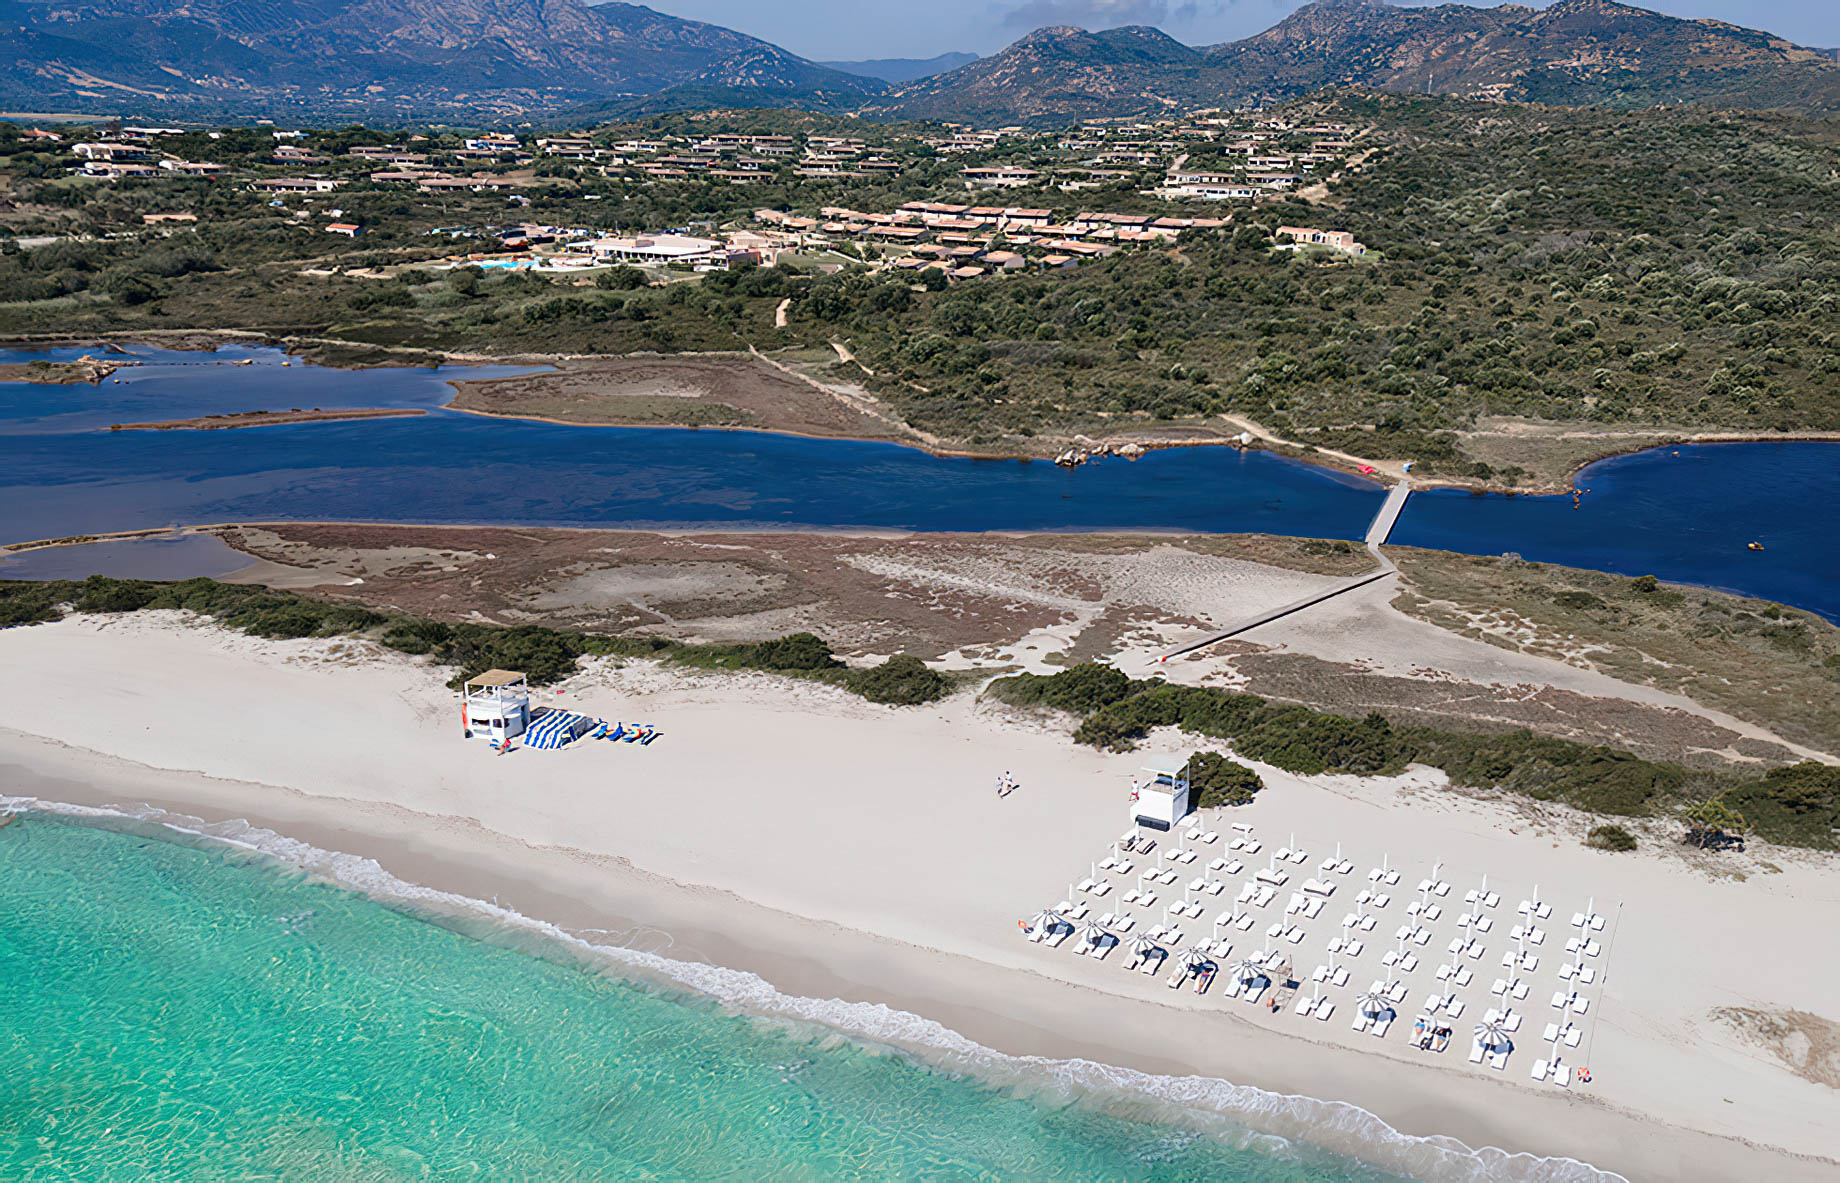 Baglioni Resort Sardinia – San Teodoro, Sardegna, Italy – Beach Aerial View